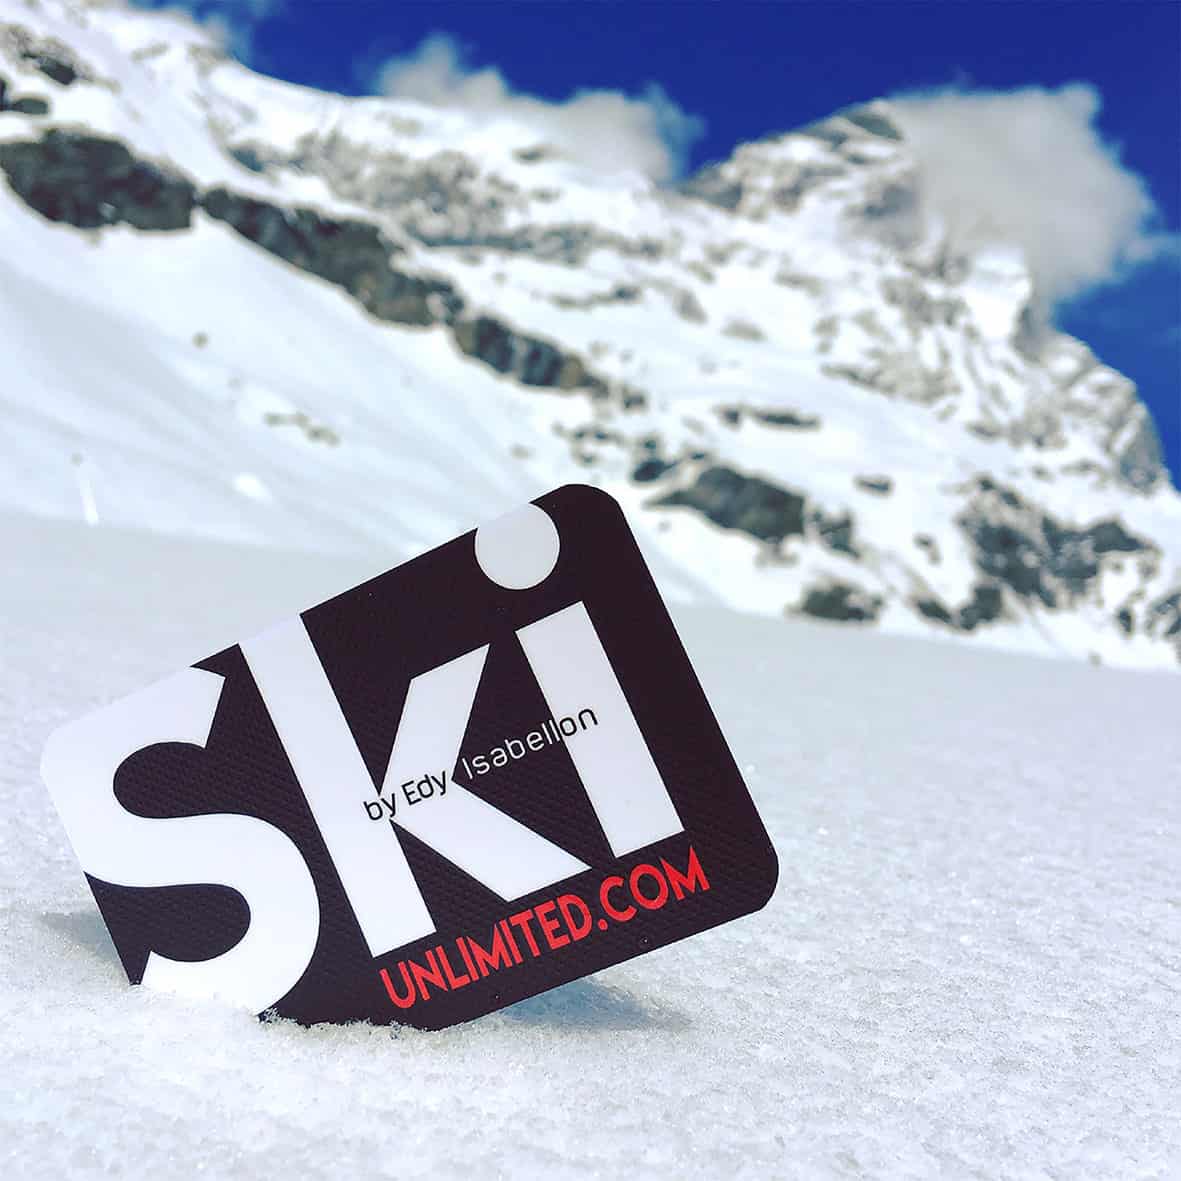 (c) Ski-unlimited.com